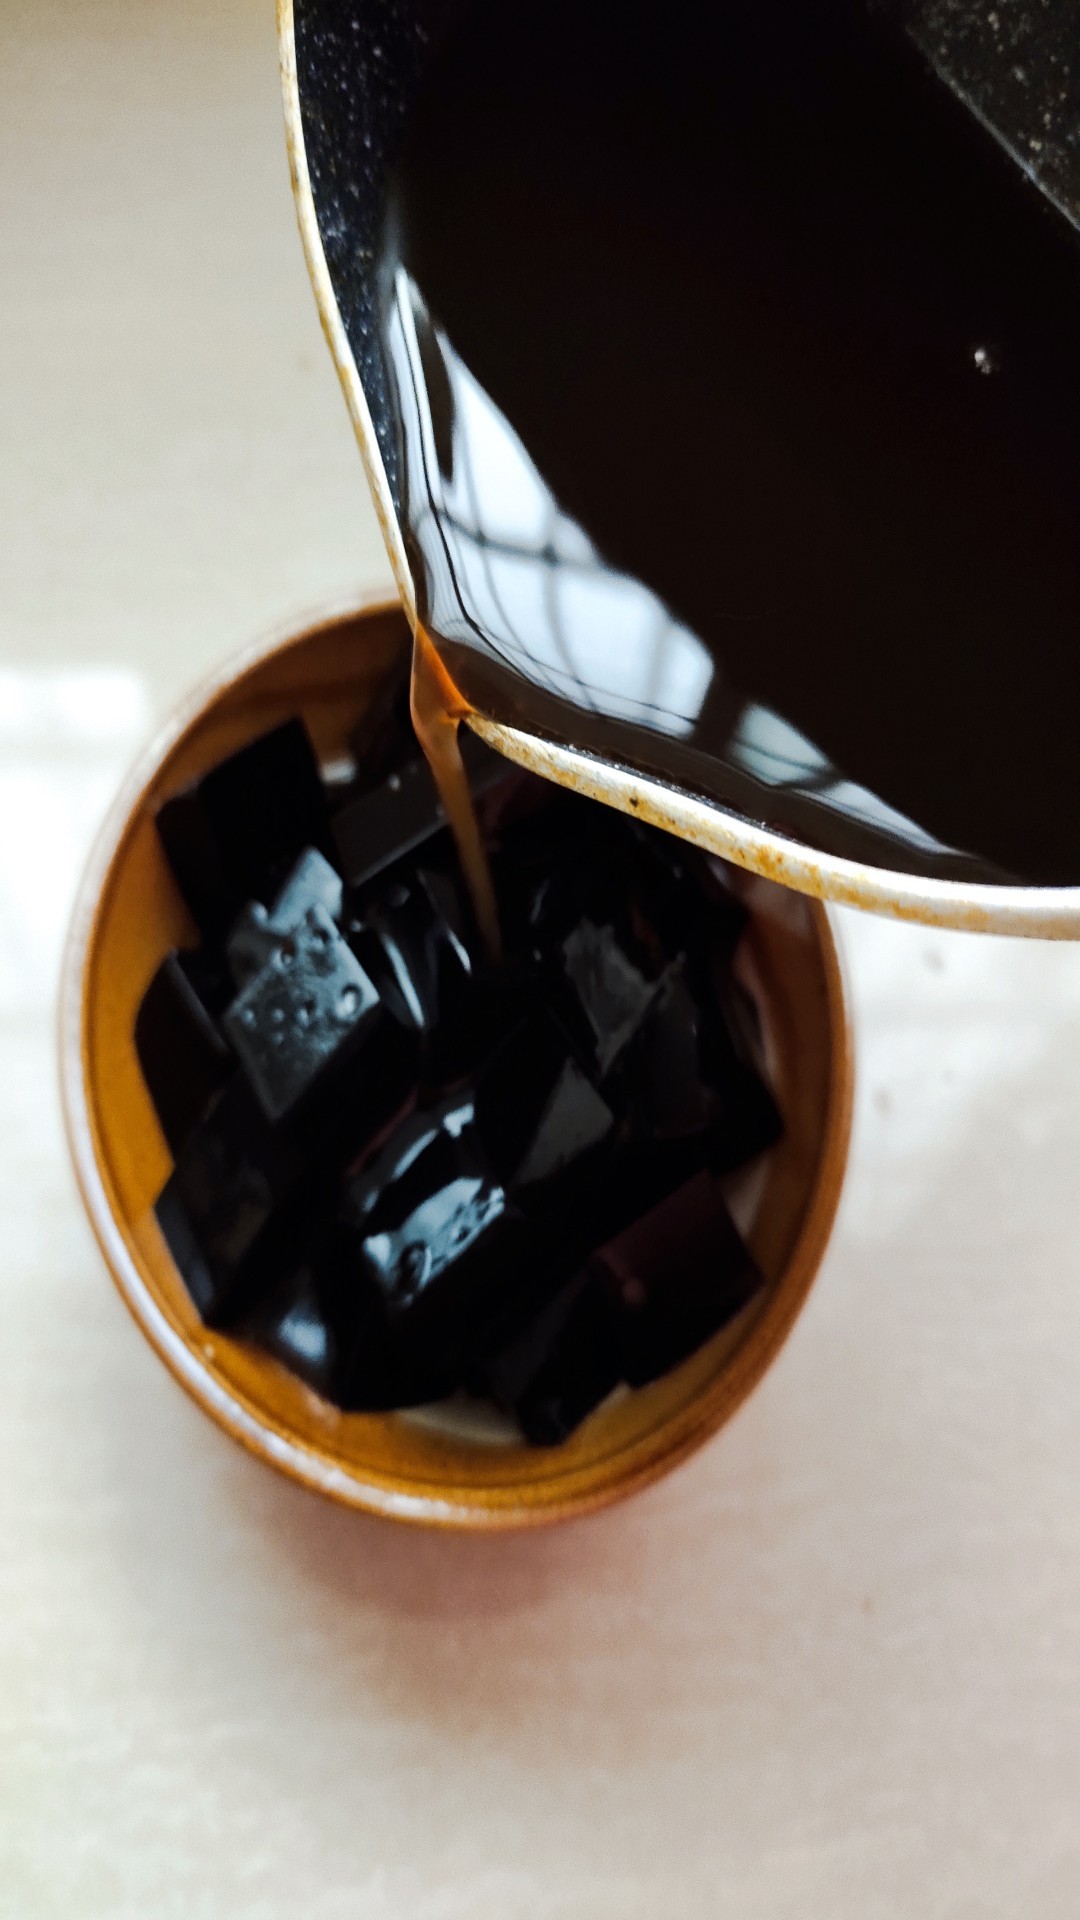 Brown Sugar and Black Jelly recipe